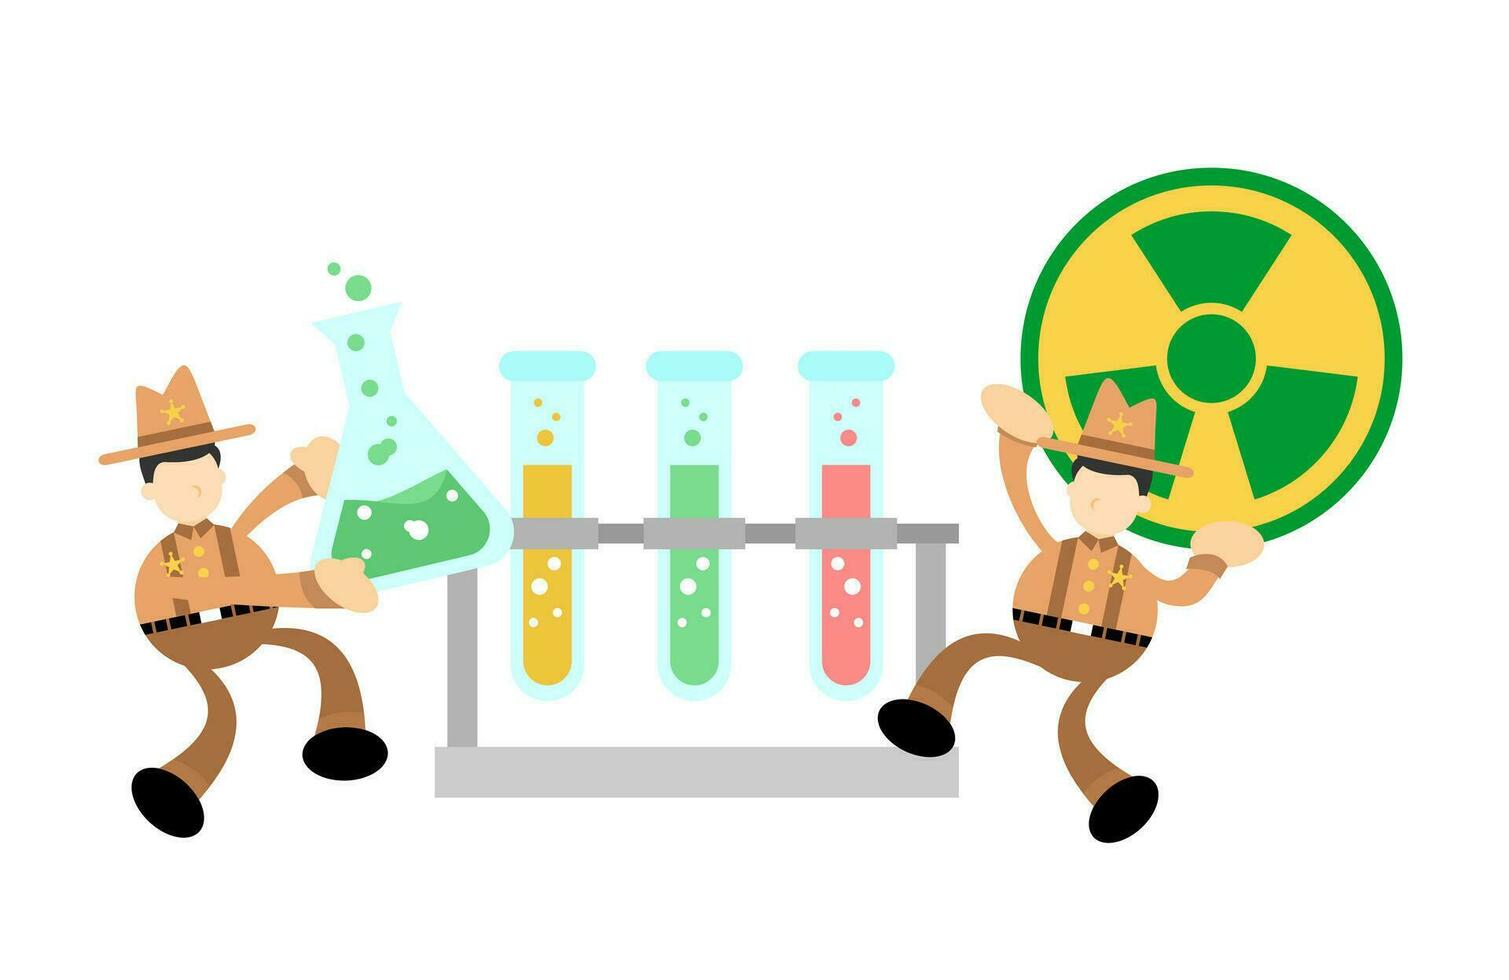 cowboy america stop hazardous skull alert danger toxic laboratory formula cartoon doodle flat design style vector illustration